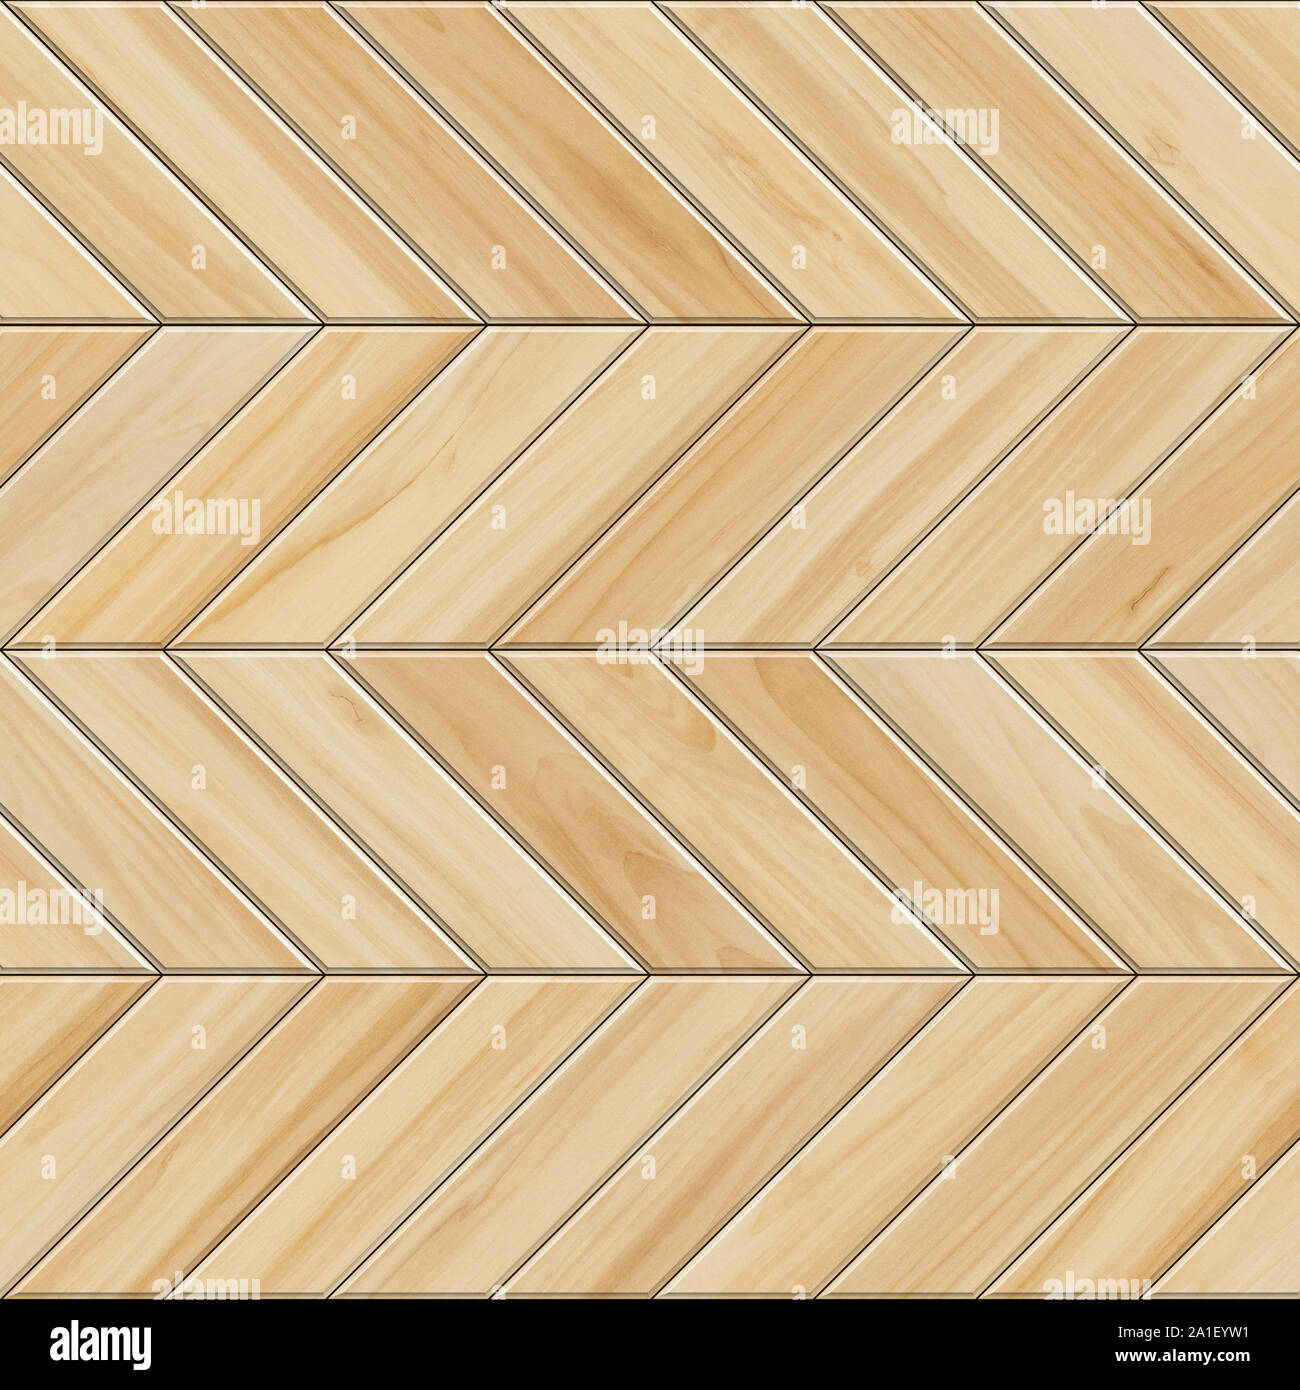 Seamless texture of chevron wooden parquet. High resolution pattern of light wood Stock Photo